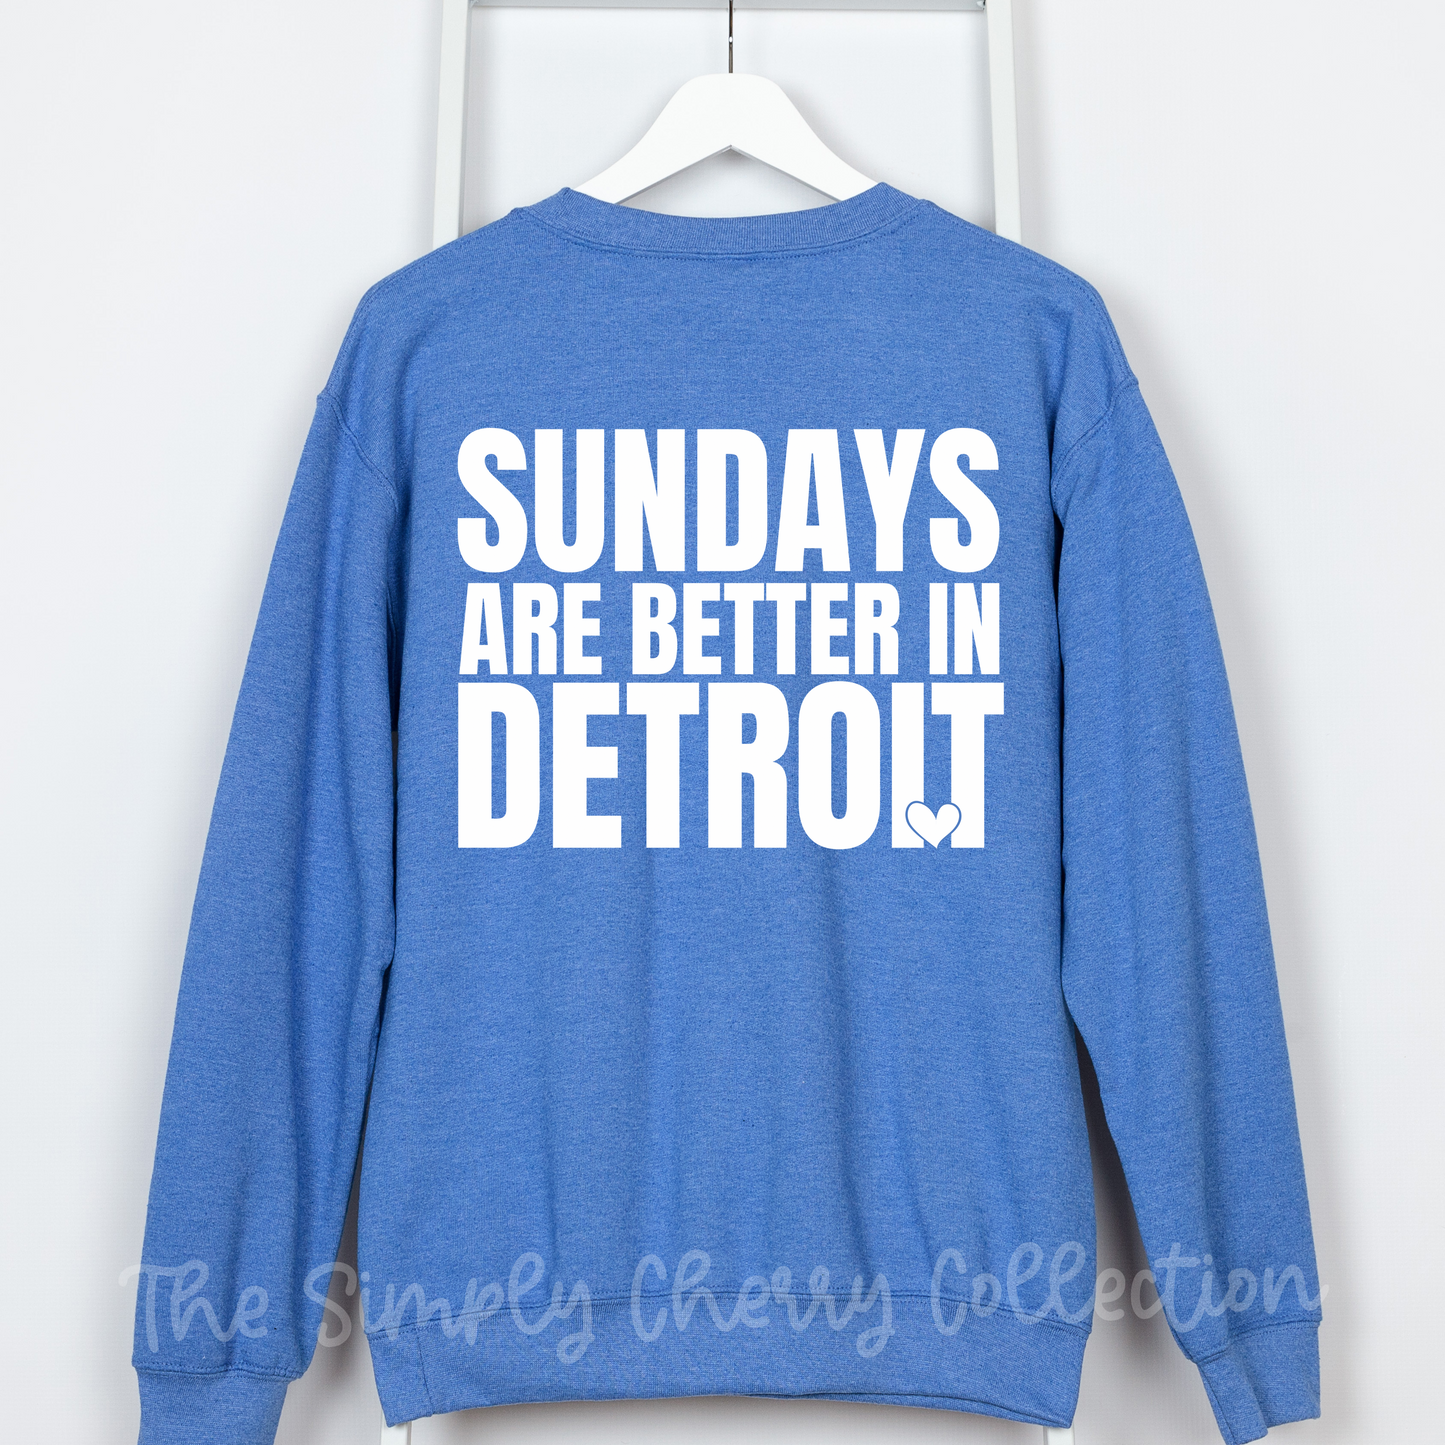 Sundays in Detroit